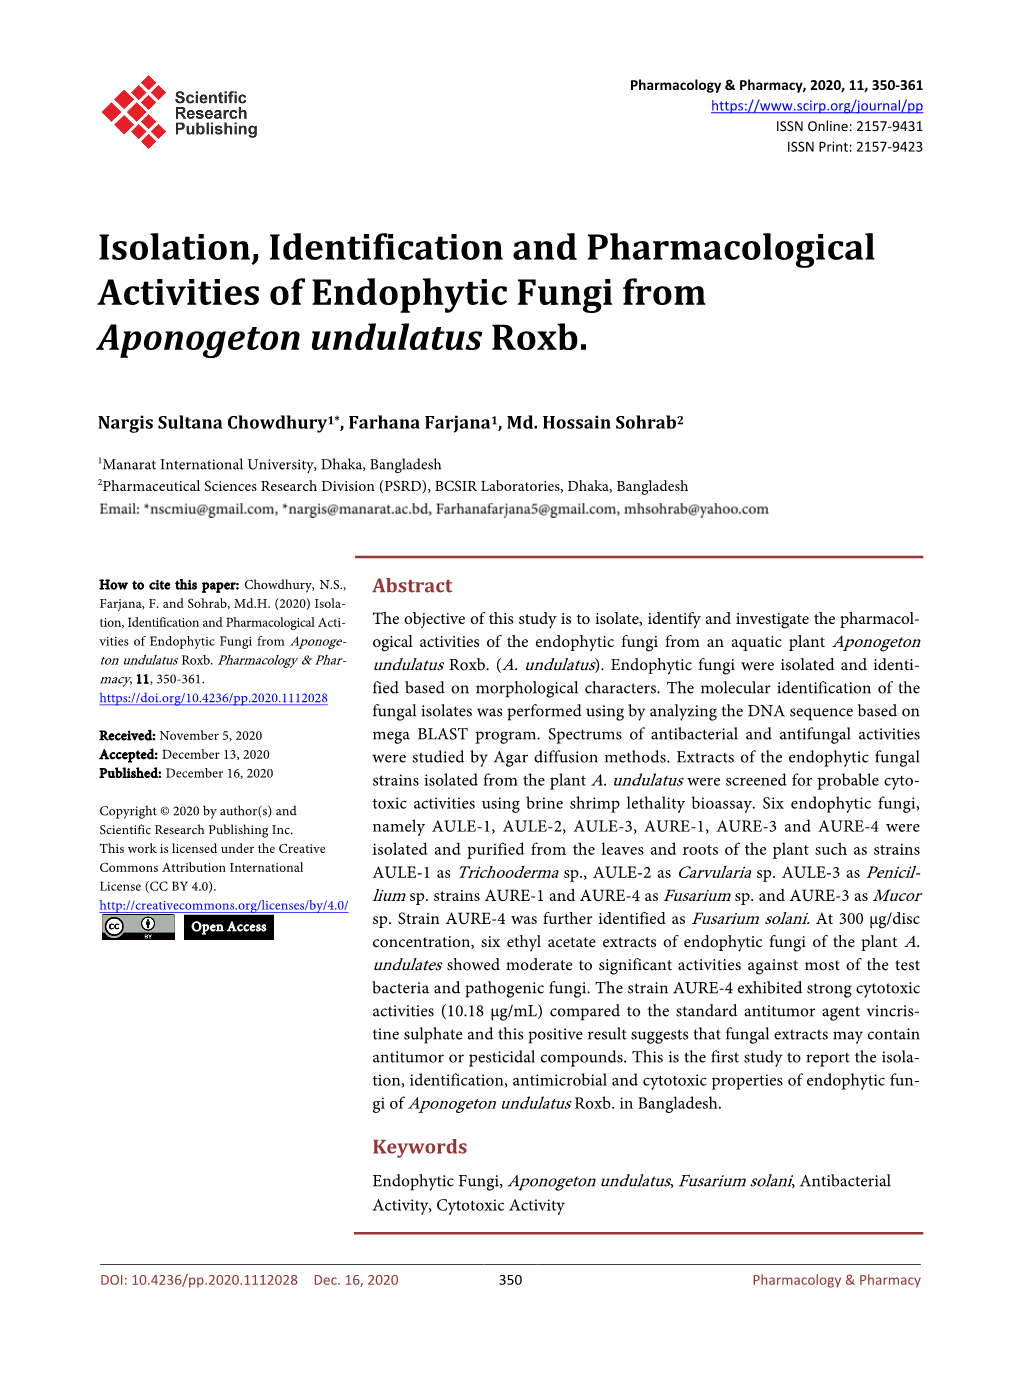 Isolation, Identification and Pharmacological Activities of Endophytic Fungi from Aponogeton Undulatus Roxb